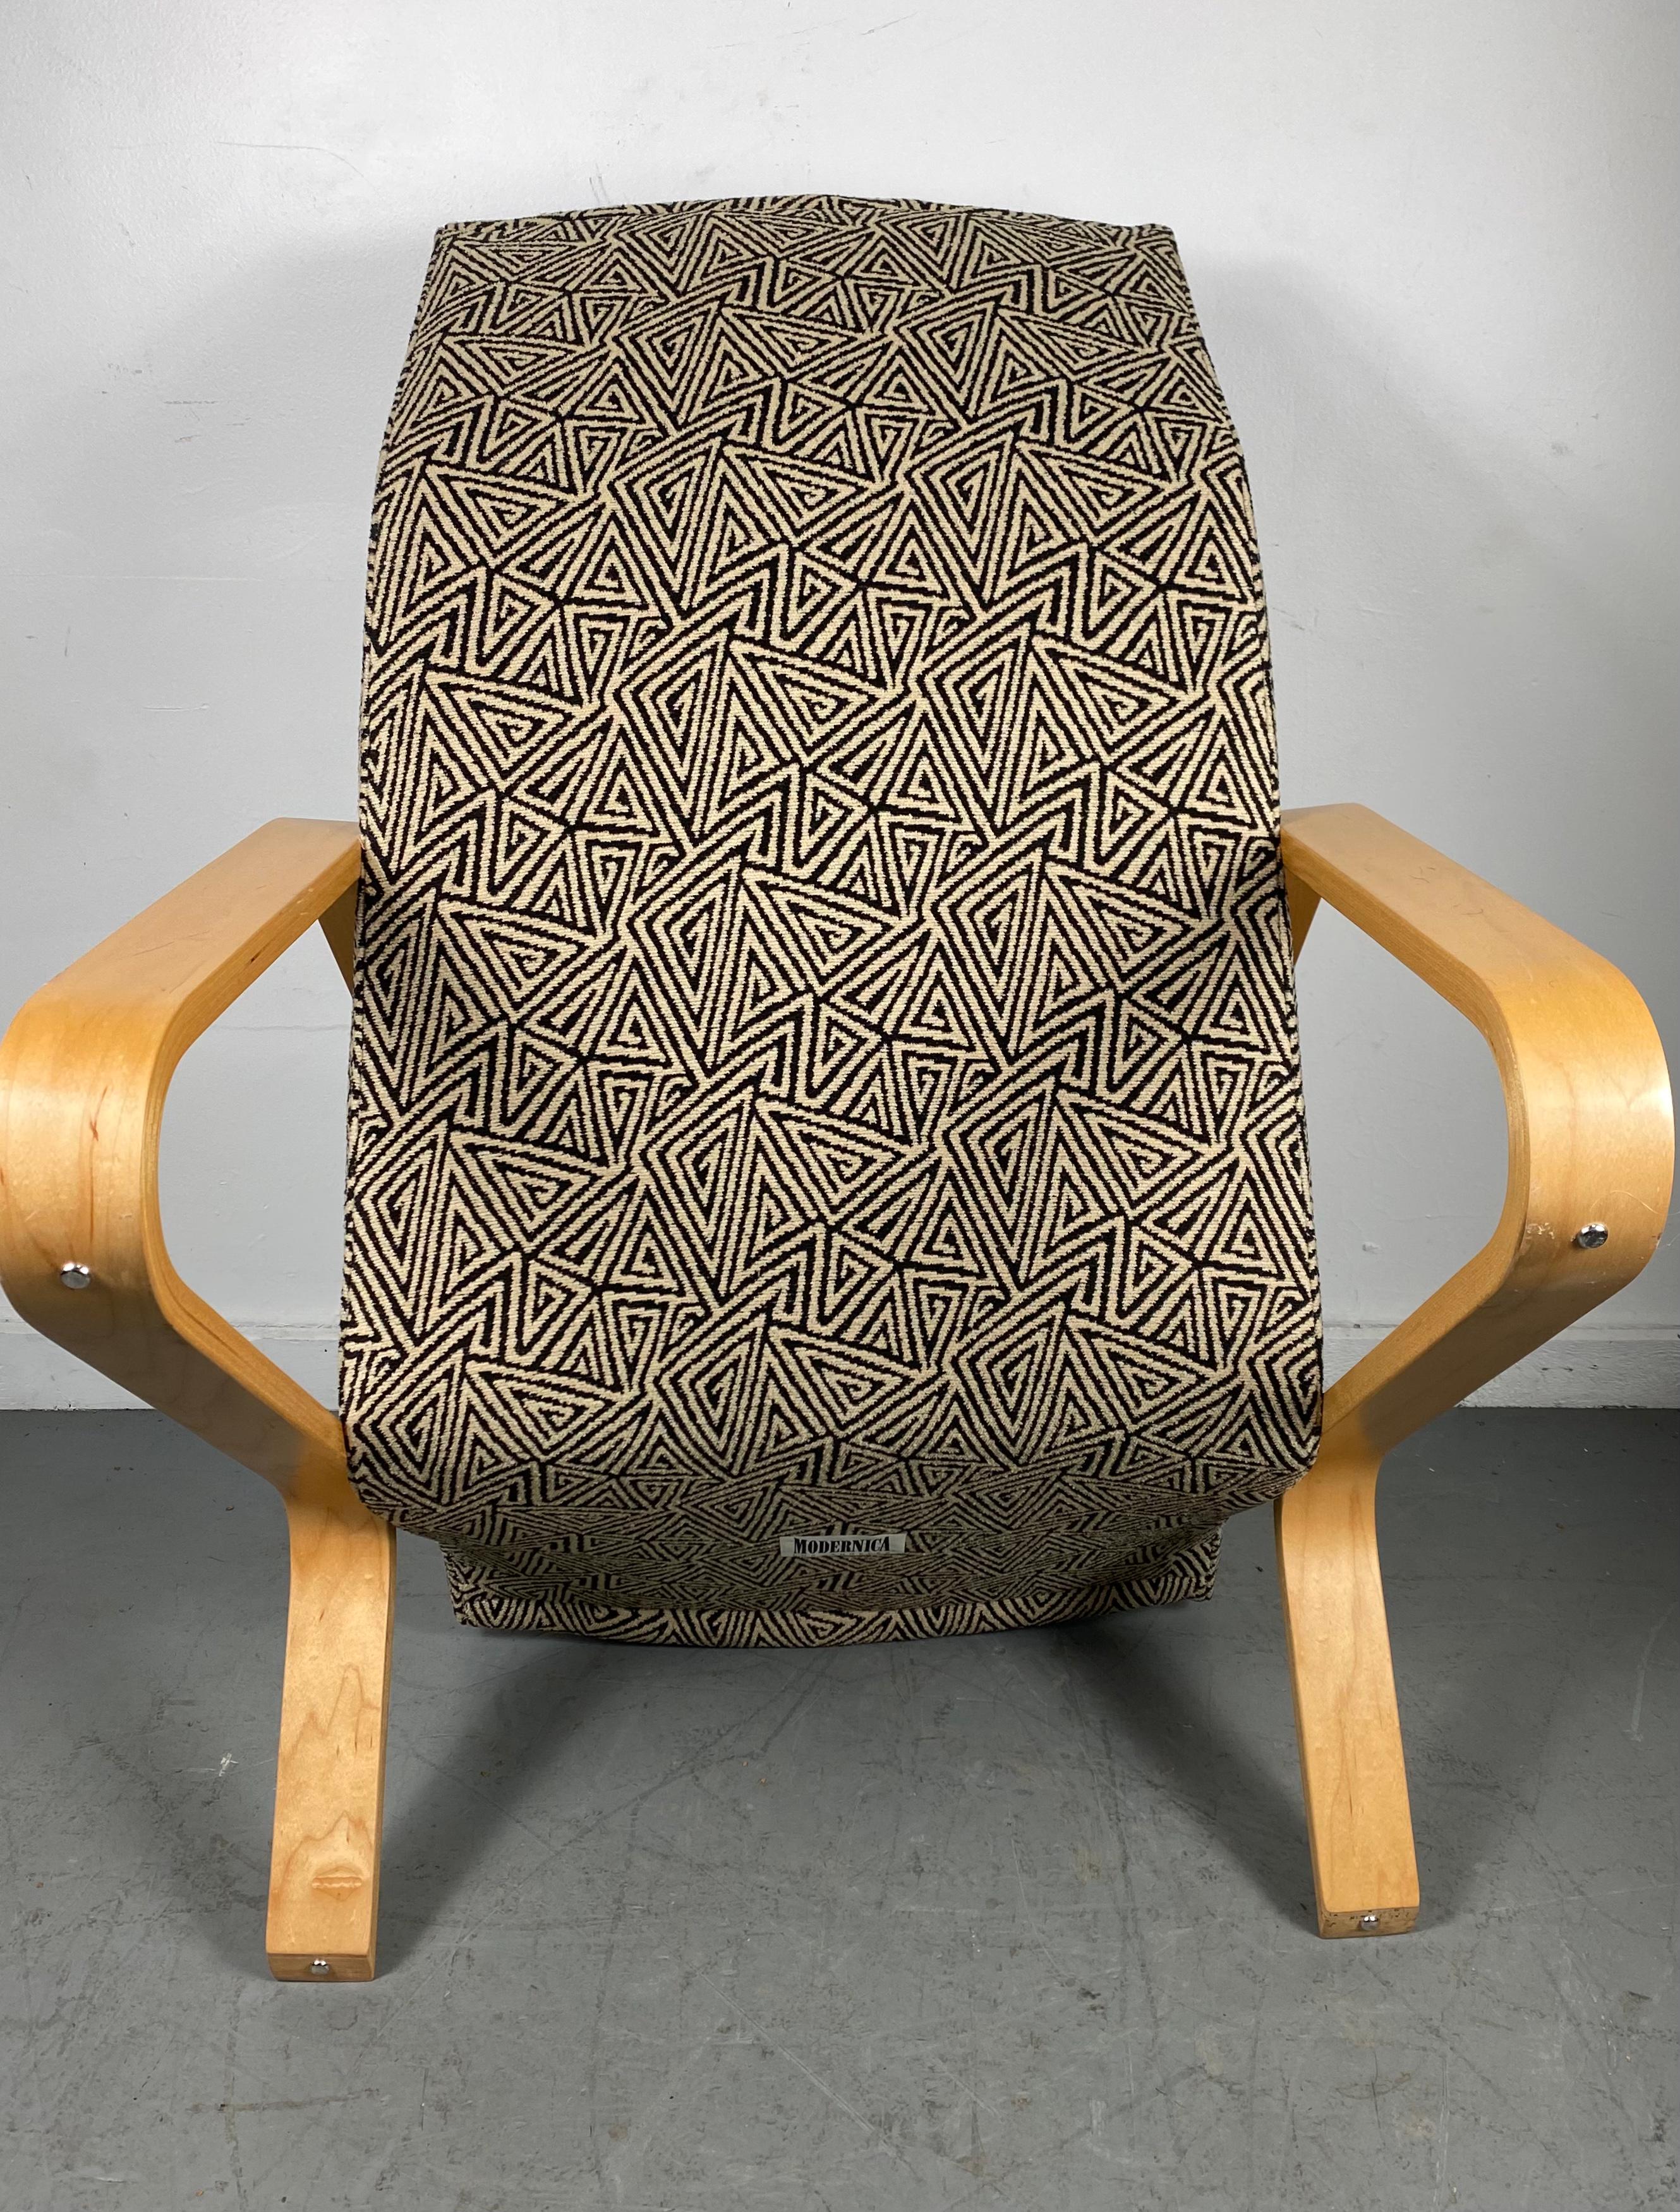 American Classic Modernist Grasshopper Lounge chair designed by Eero Saarinen / Modernica